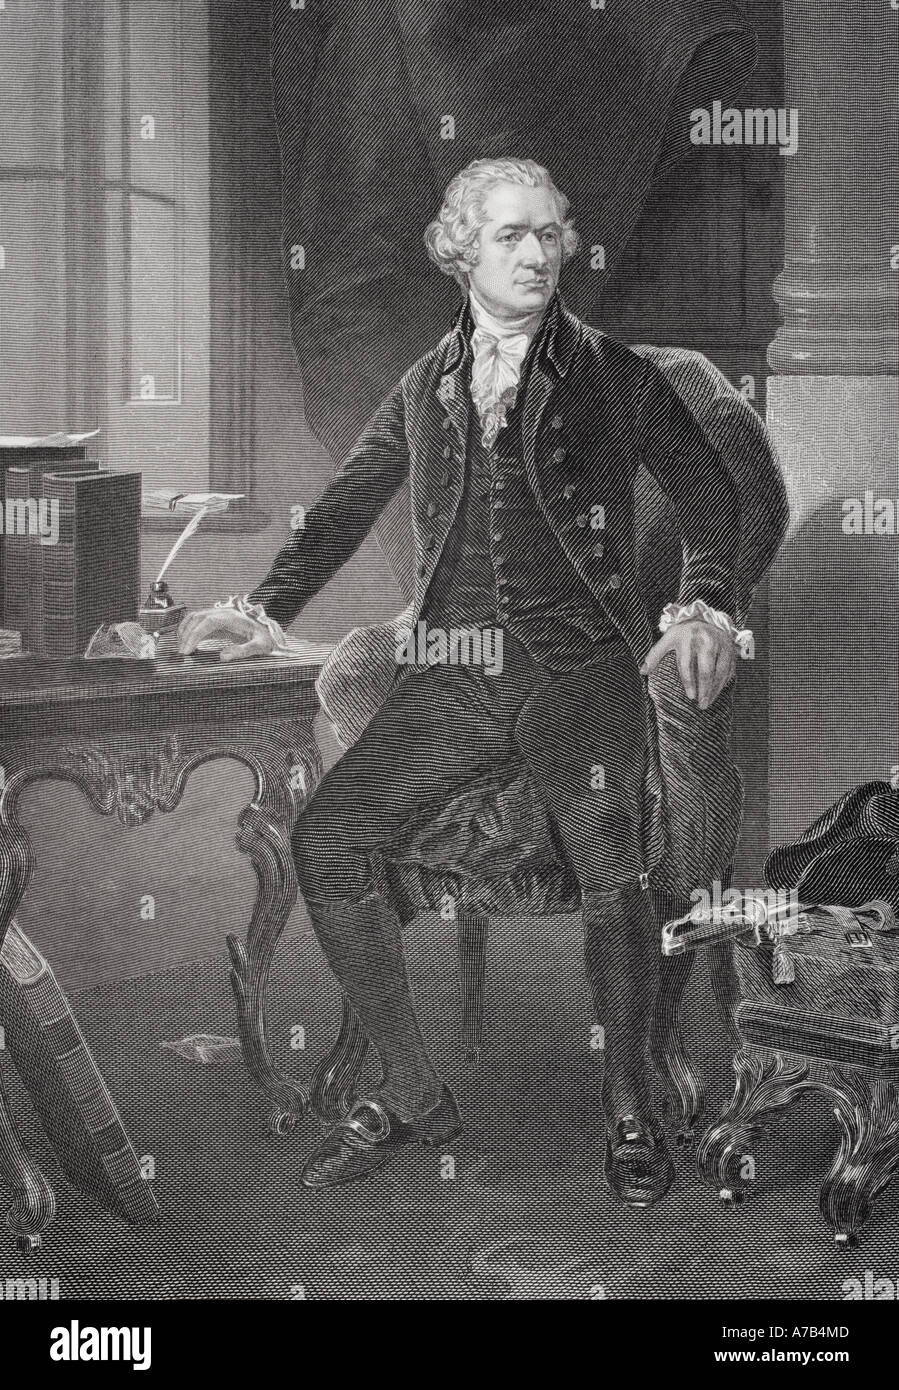 Alexander Hamilton, 1755/1757-1804. Amerikanischer Staatsmann, Politiker, Rechtswissenschaftler, Militärkommandeur, Anwalt, Banker und Ökonom. Stockfoto